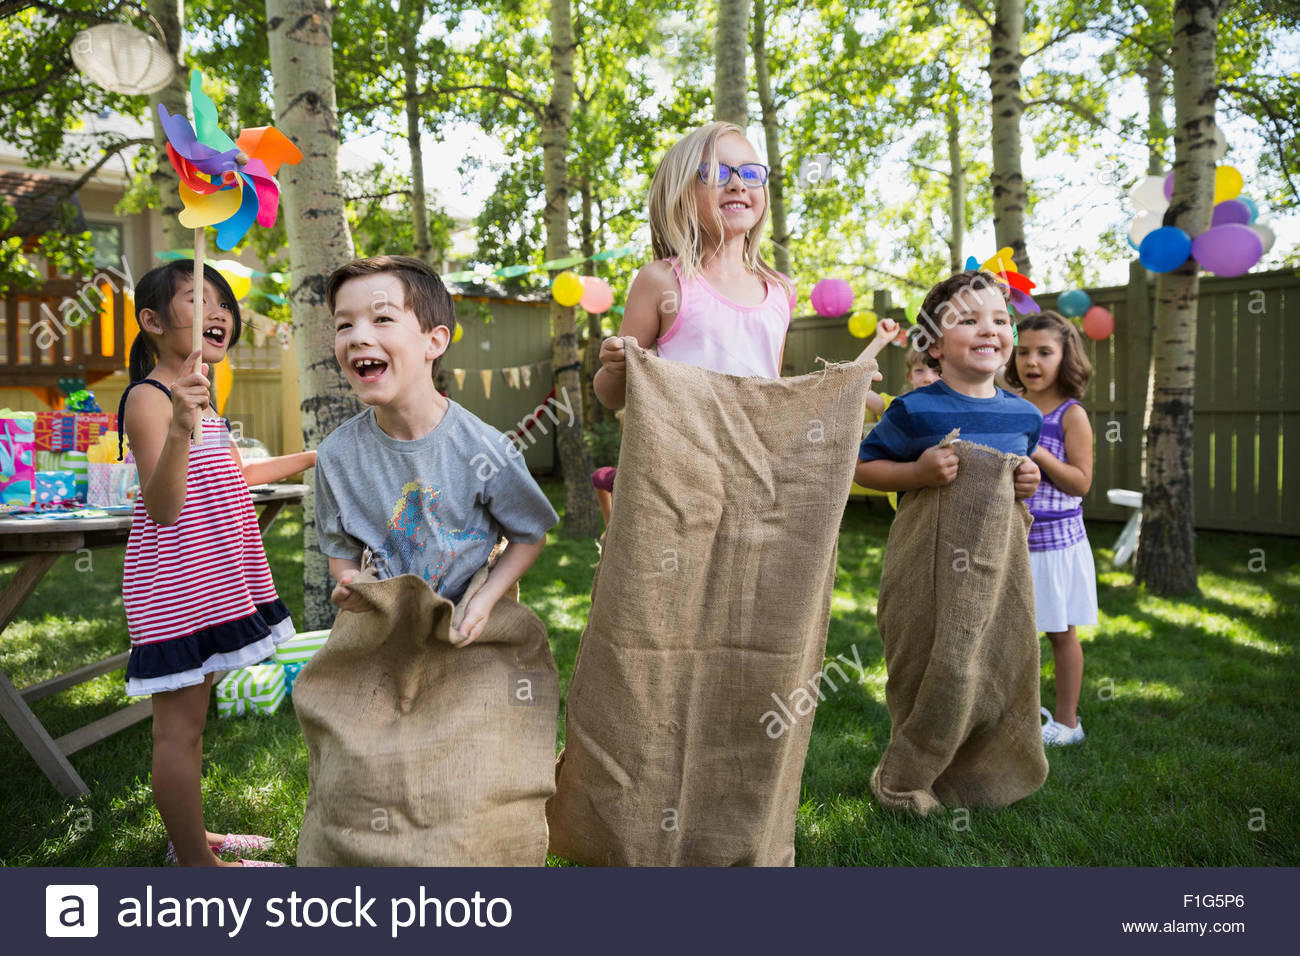 Kids Enjoying Sack Race At Backyard Birthday Party Stock Photo